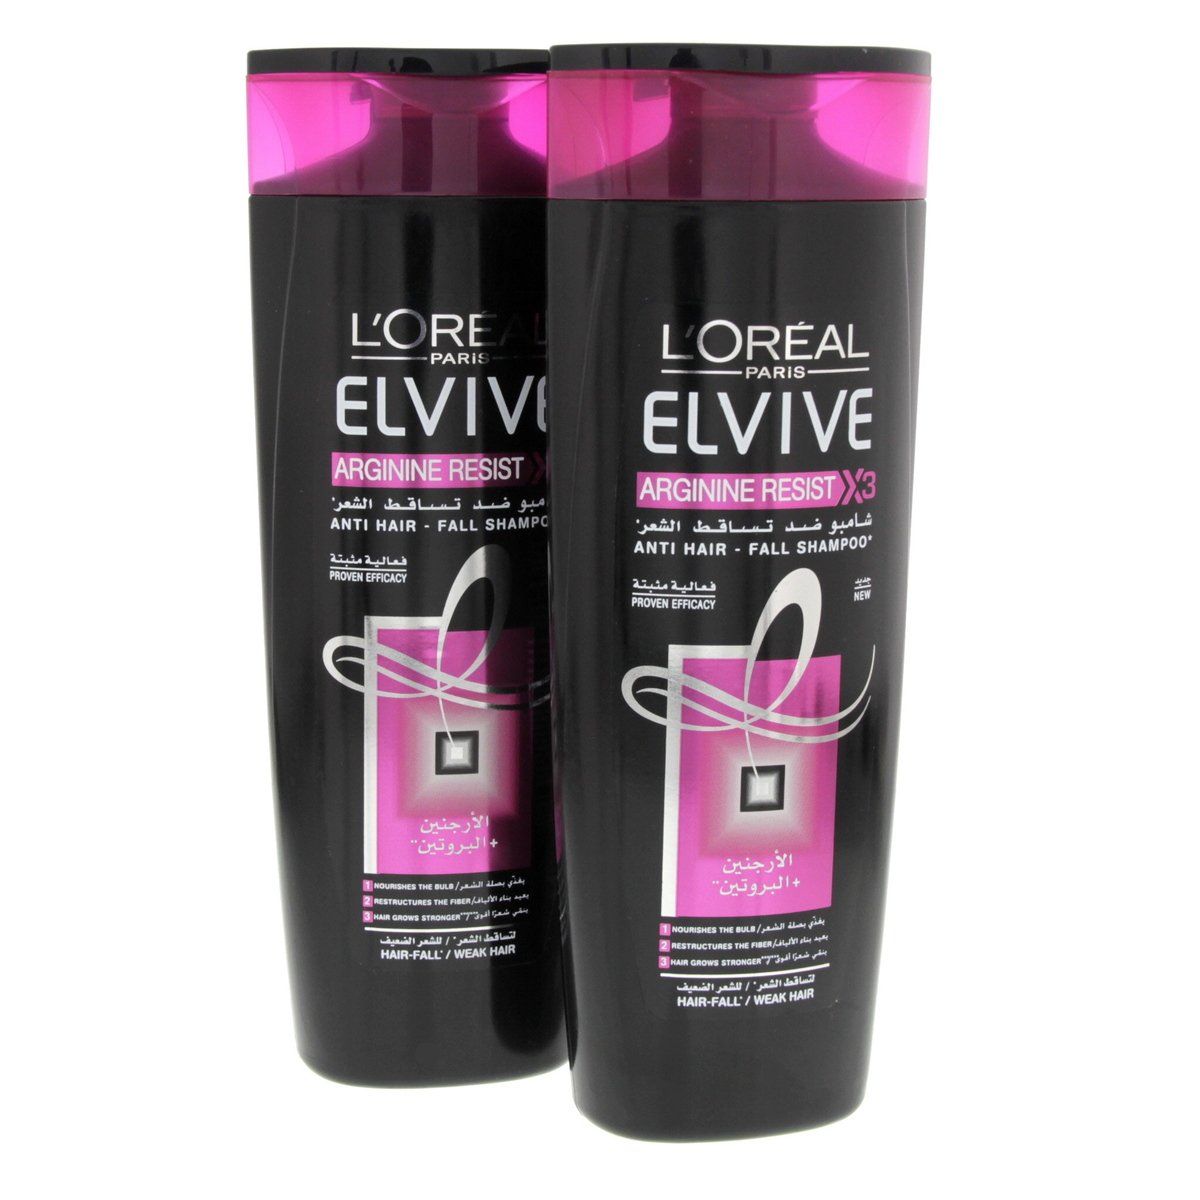 L'oreal Elvive Arginine Resist Shampoo 400ml x 2pcs